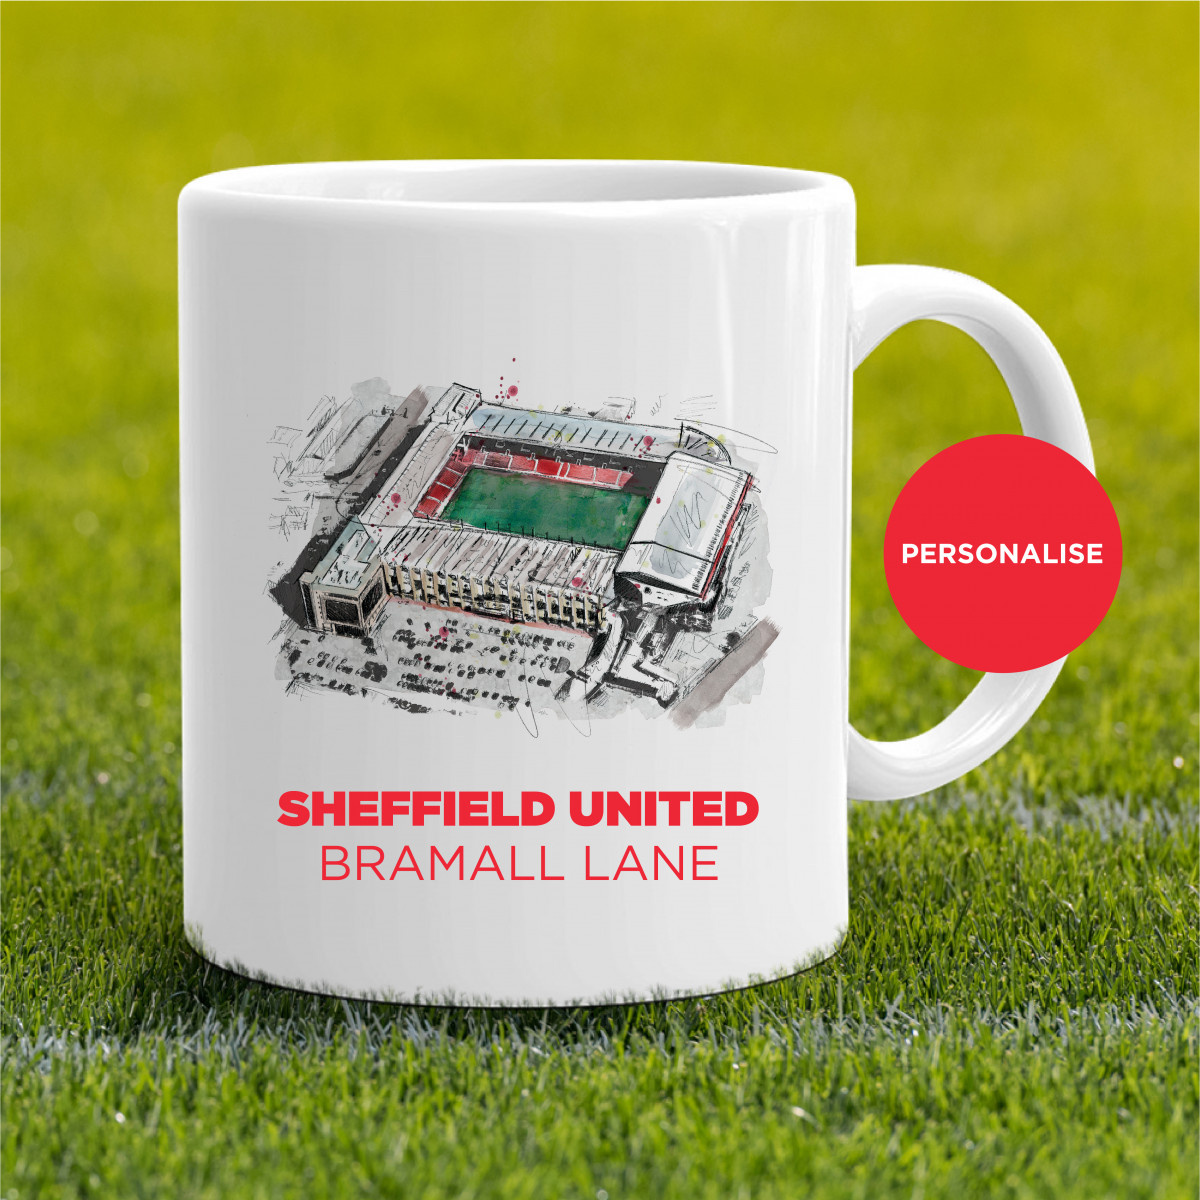 Sheffield United - Brammall Lane, personalised Mug